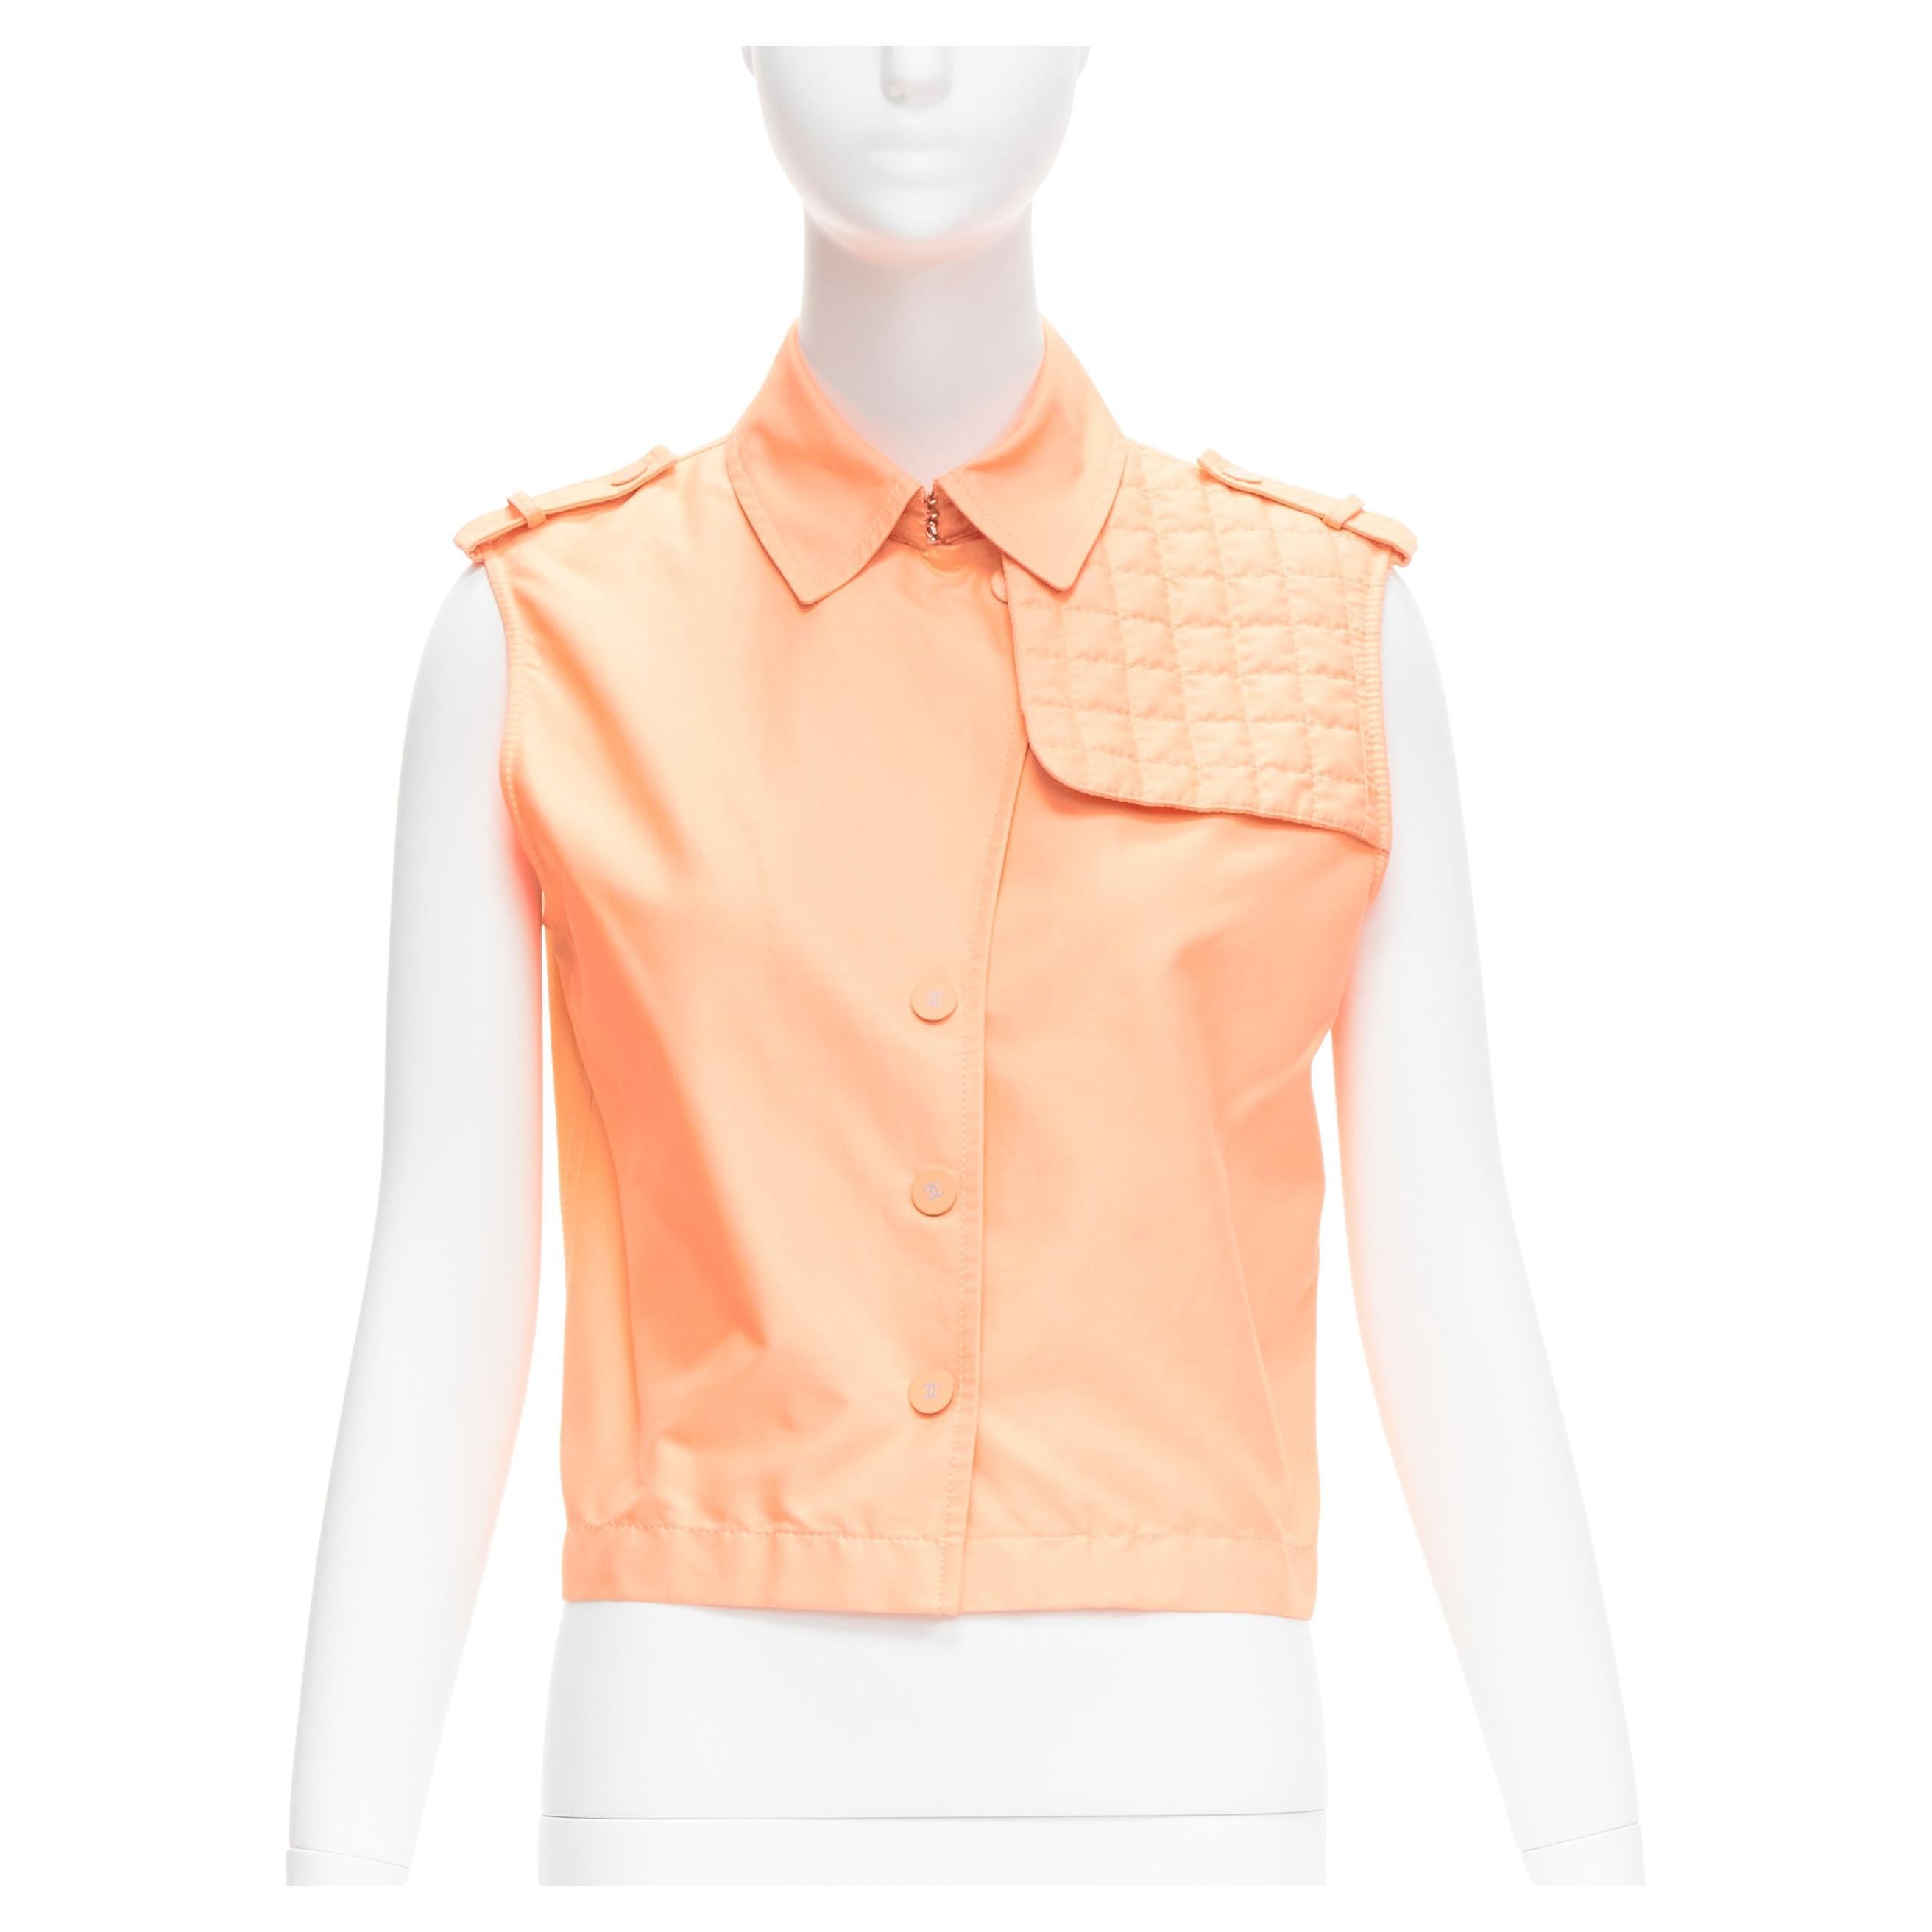 Chanel CHANEL Coco button Stripe Blouse Long Sleeve Shirt Orange x